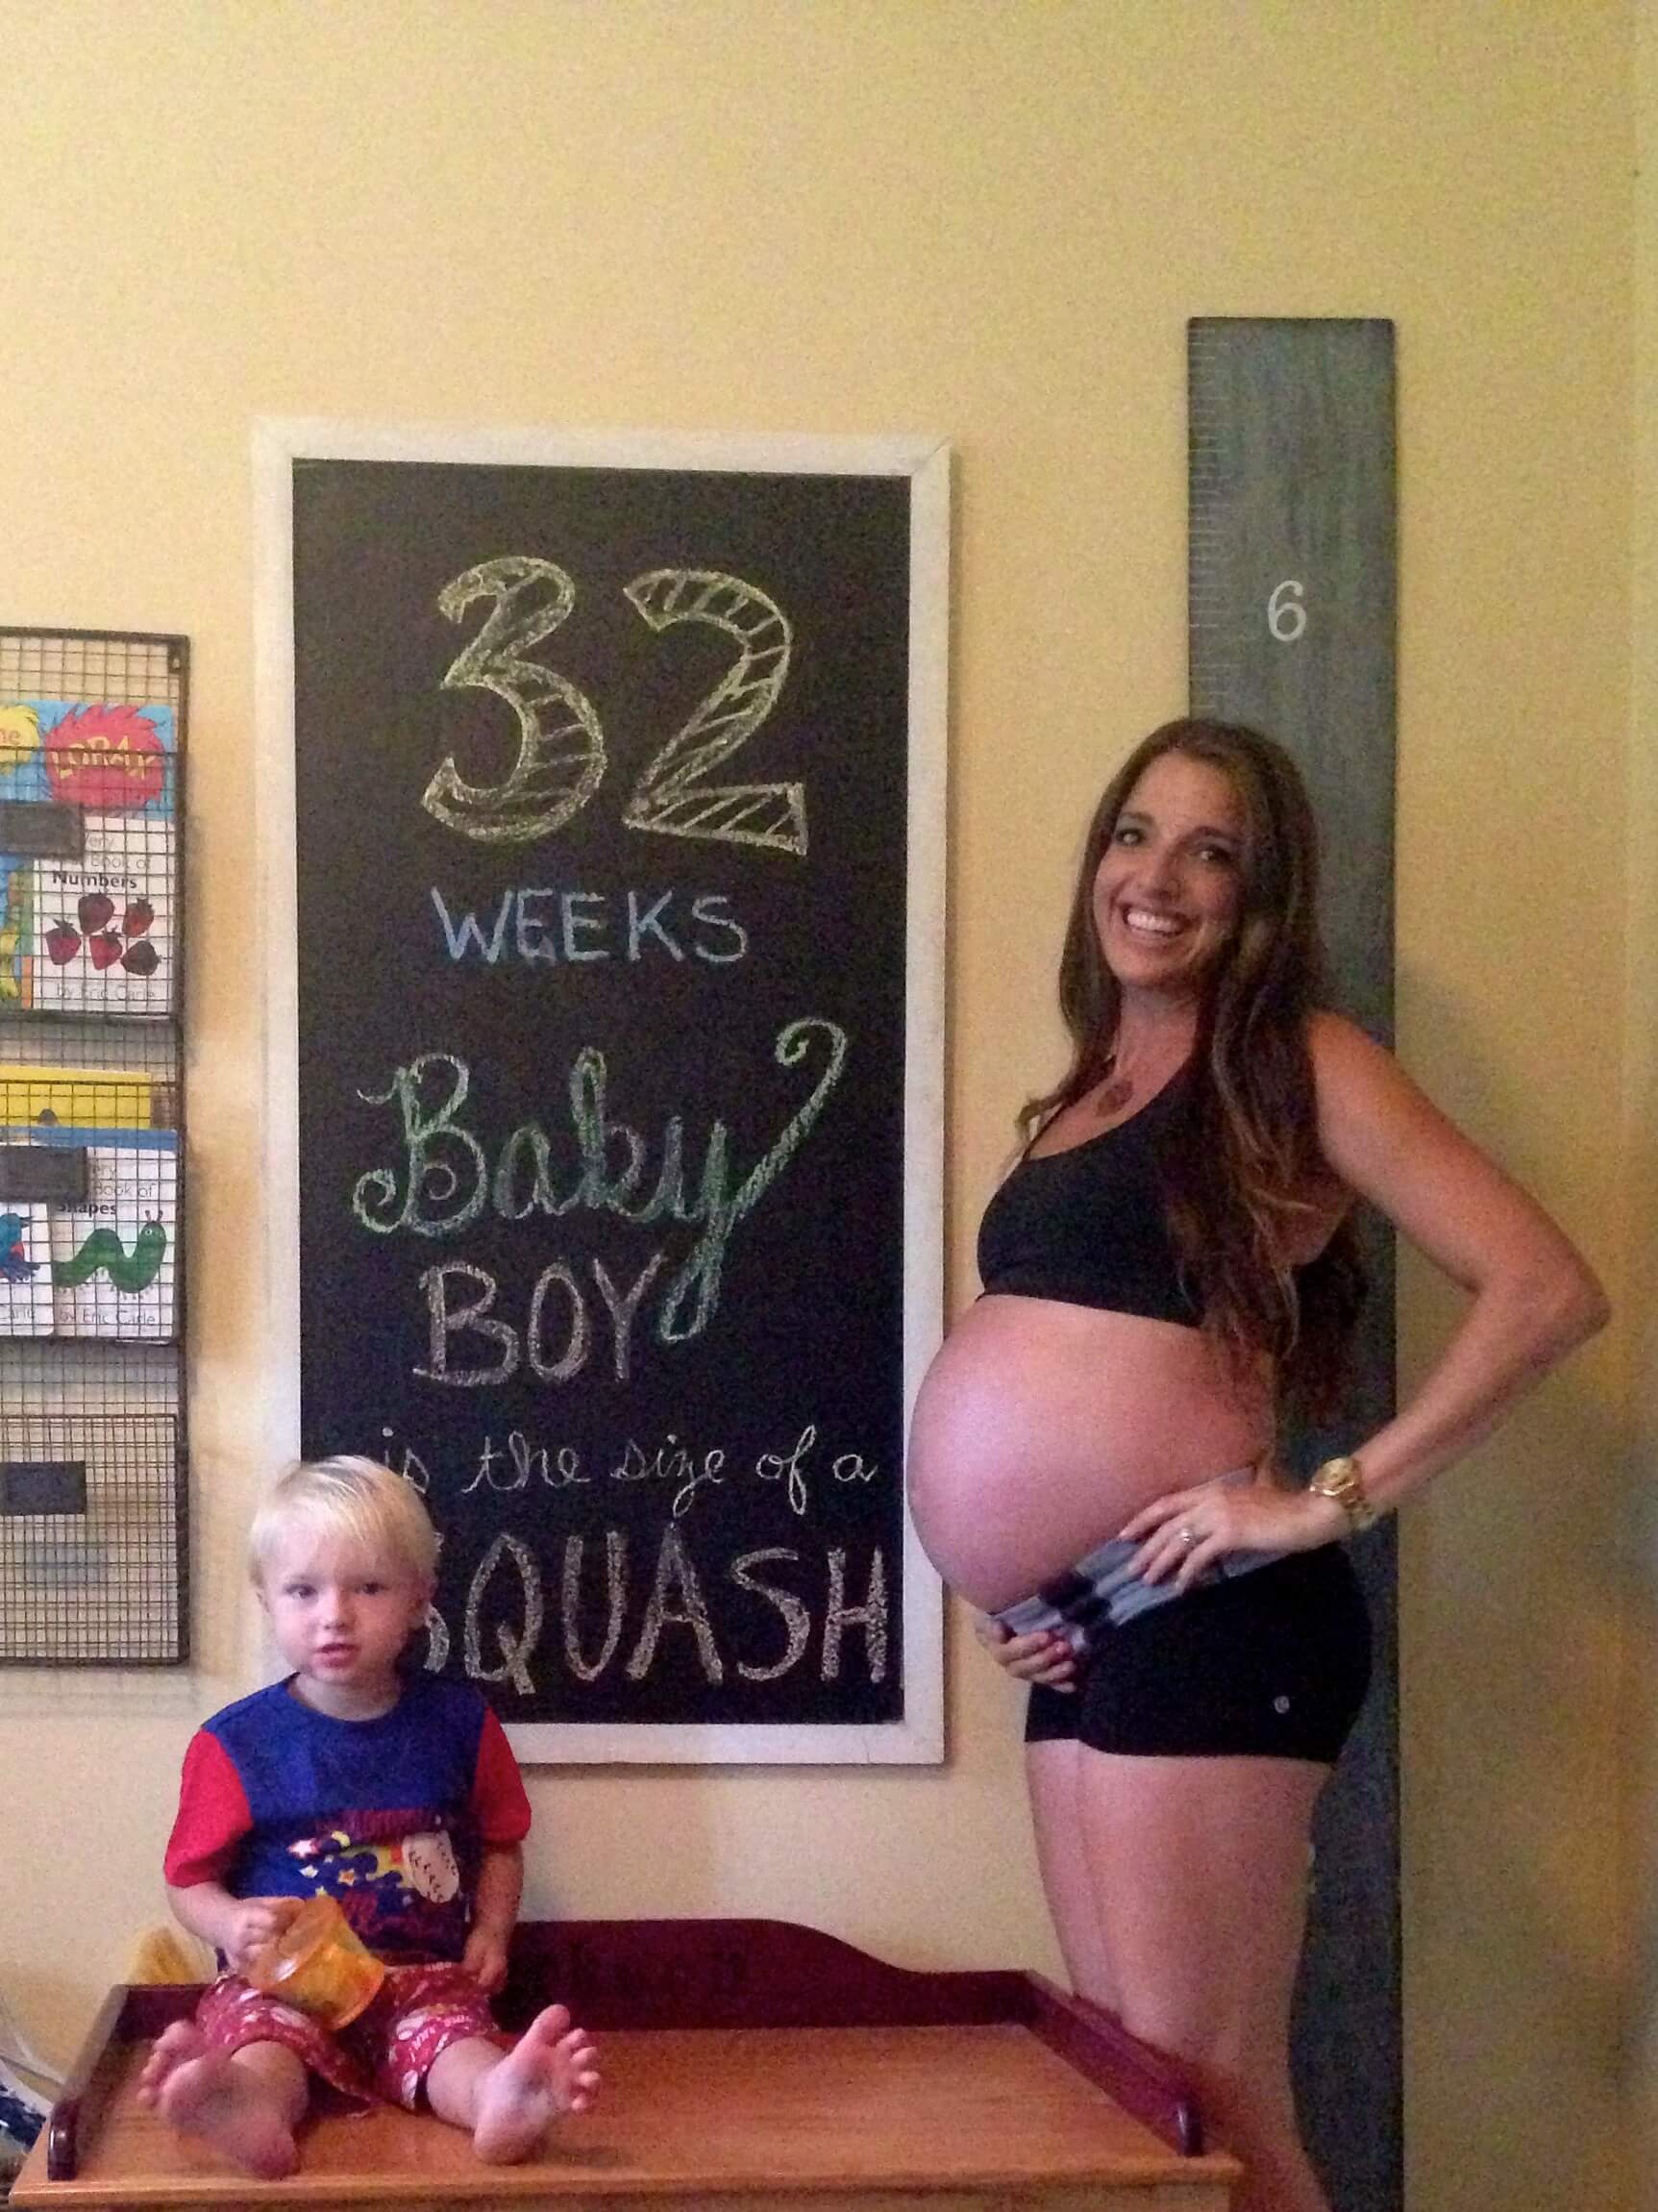 32 Weeks pregnant belly